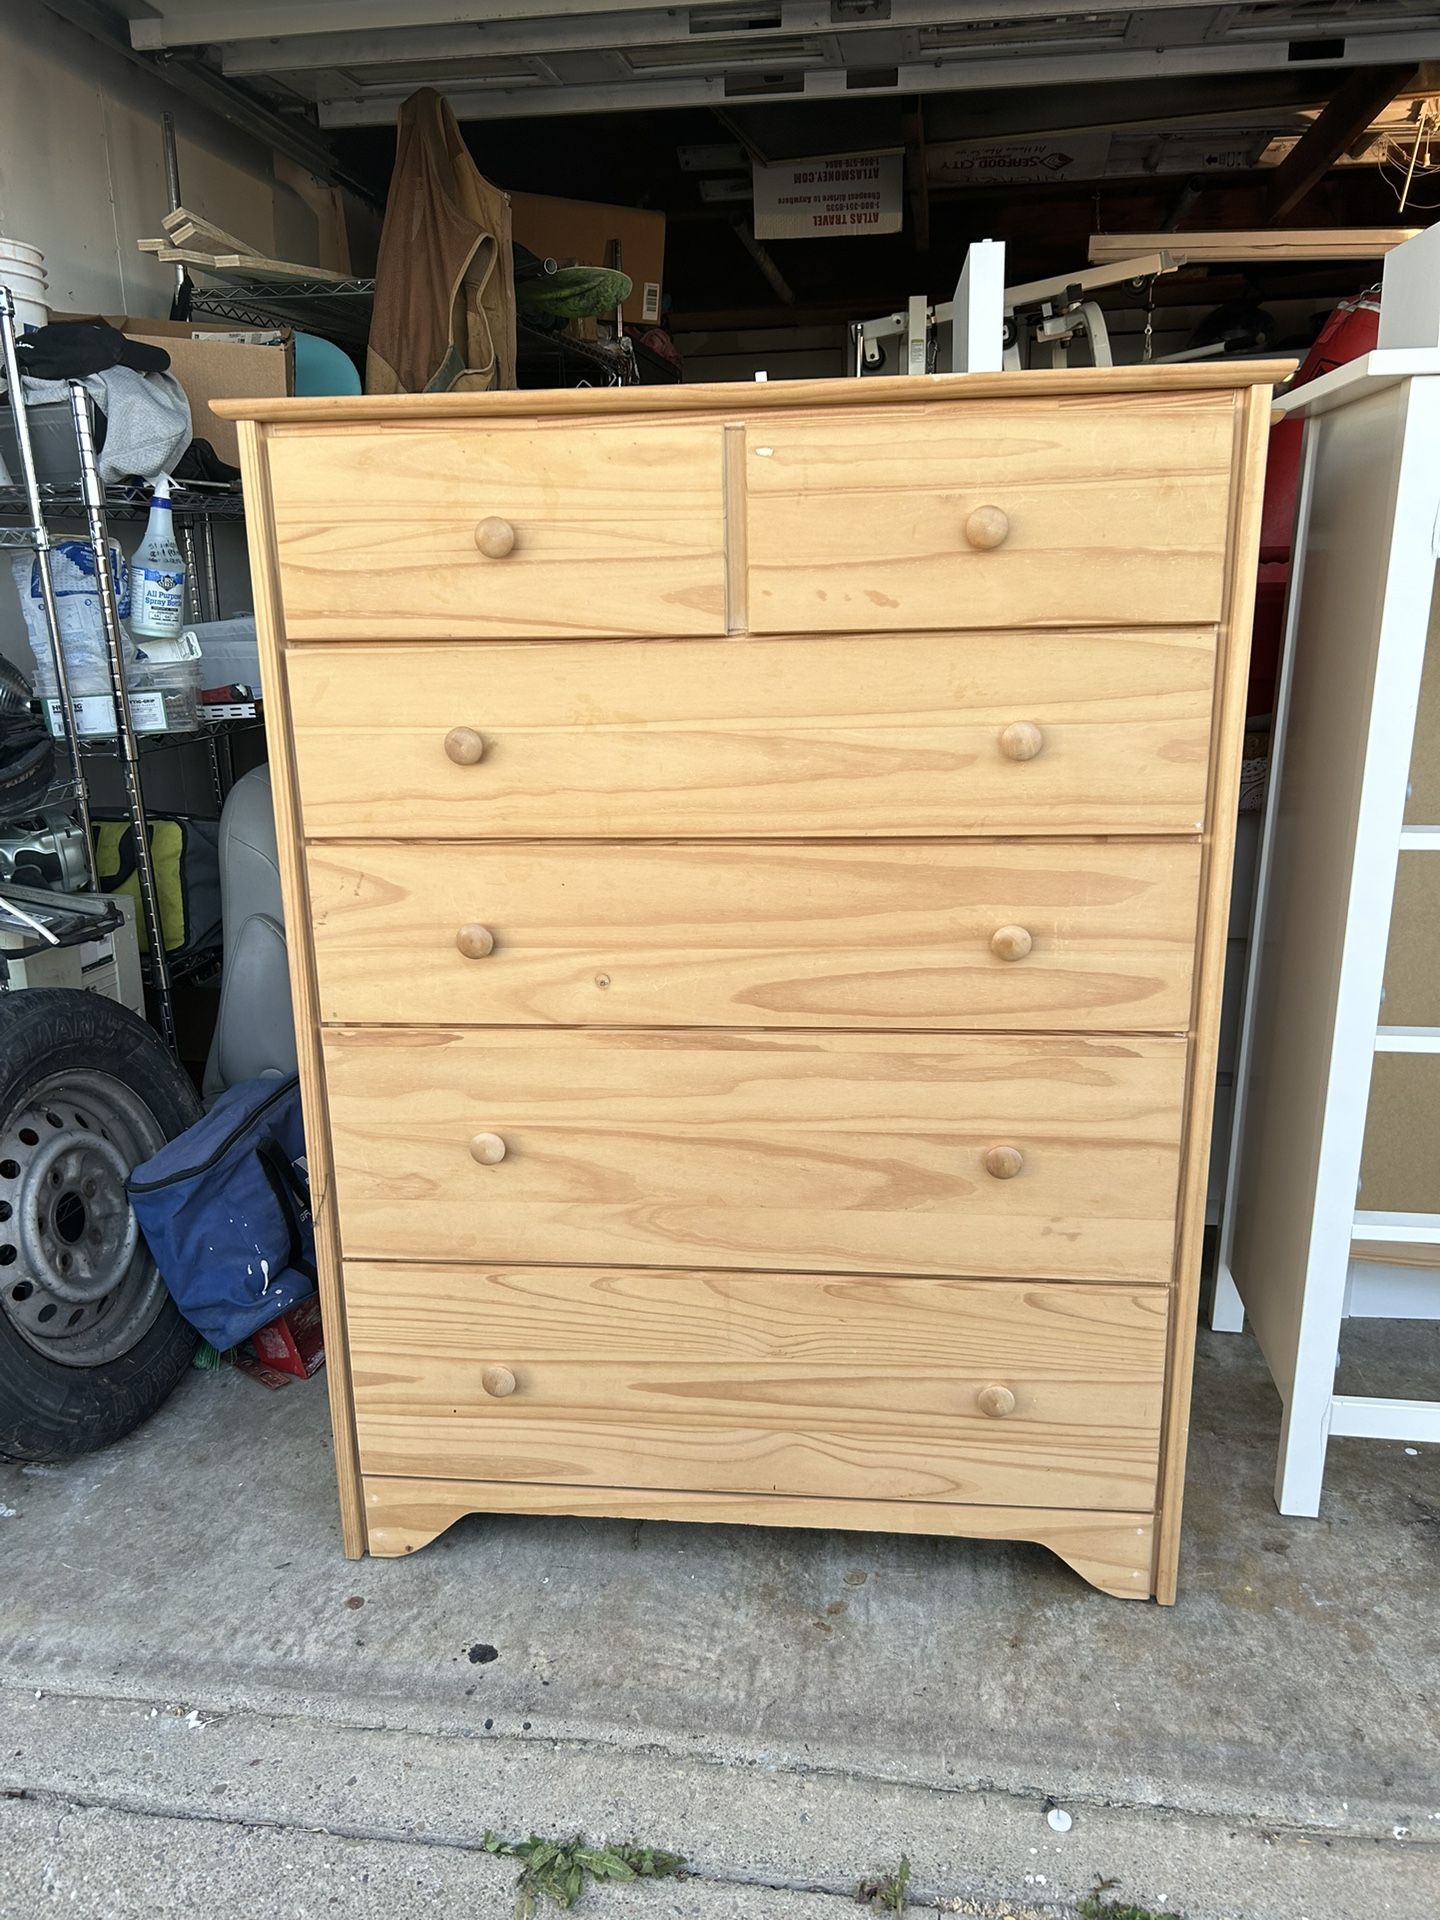 Wood Dresser $200